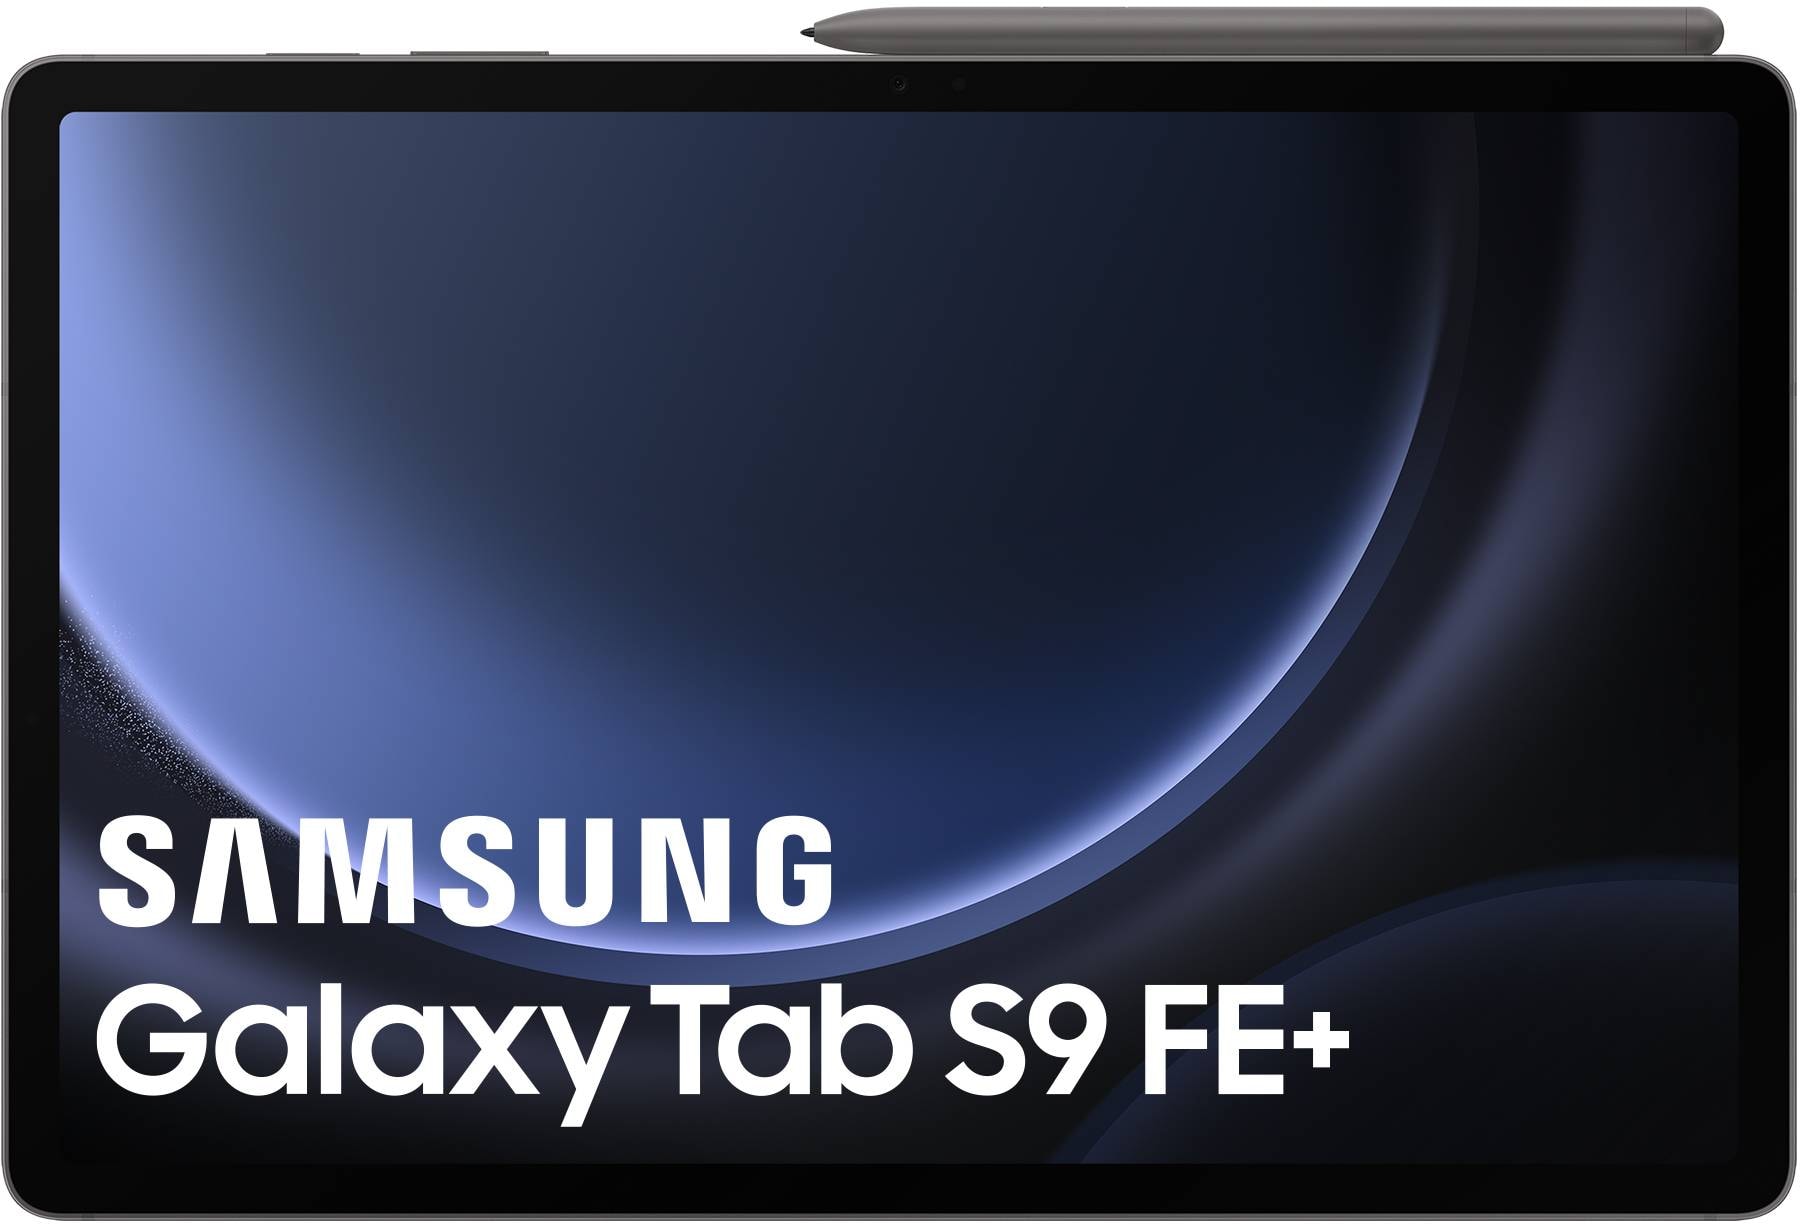 Casques audio pour Samsung Galaxy Tab A6 10.1 sur